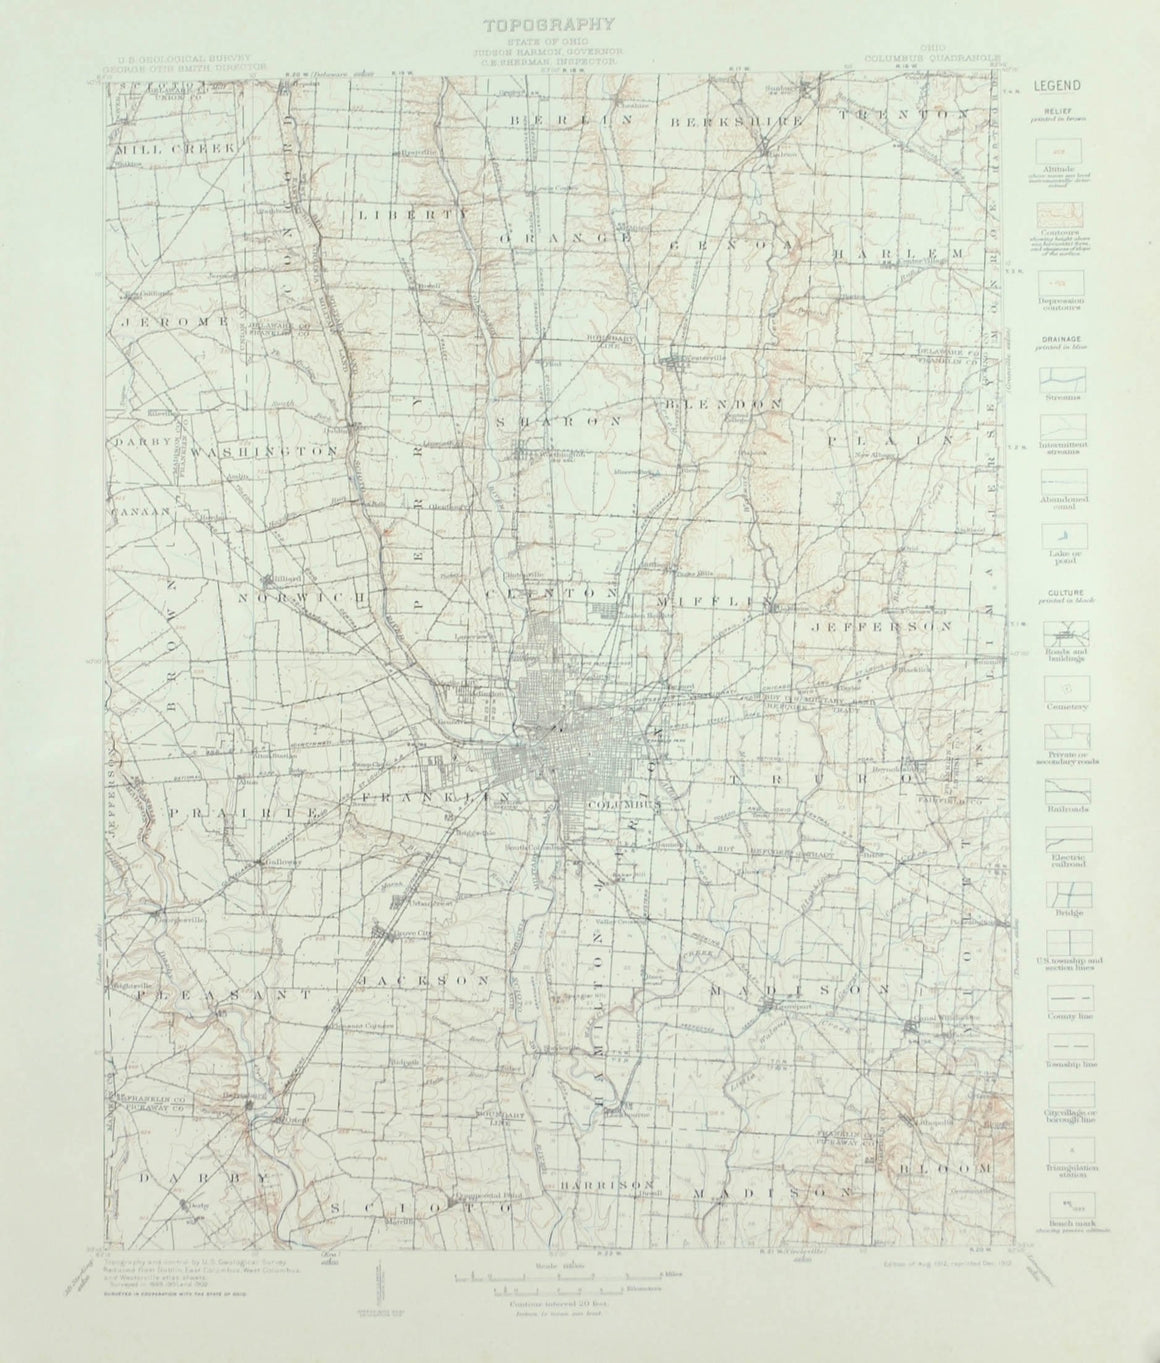 1915 Topography Ohio Columbus Quadrangle - G D Hubbard